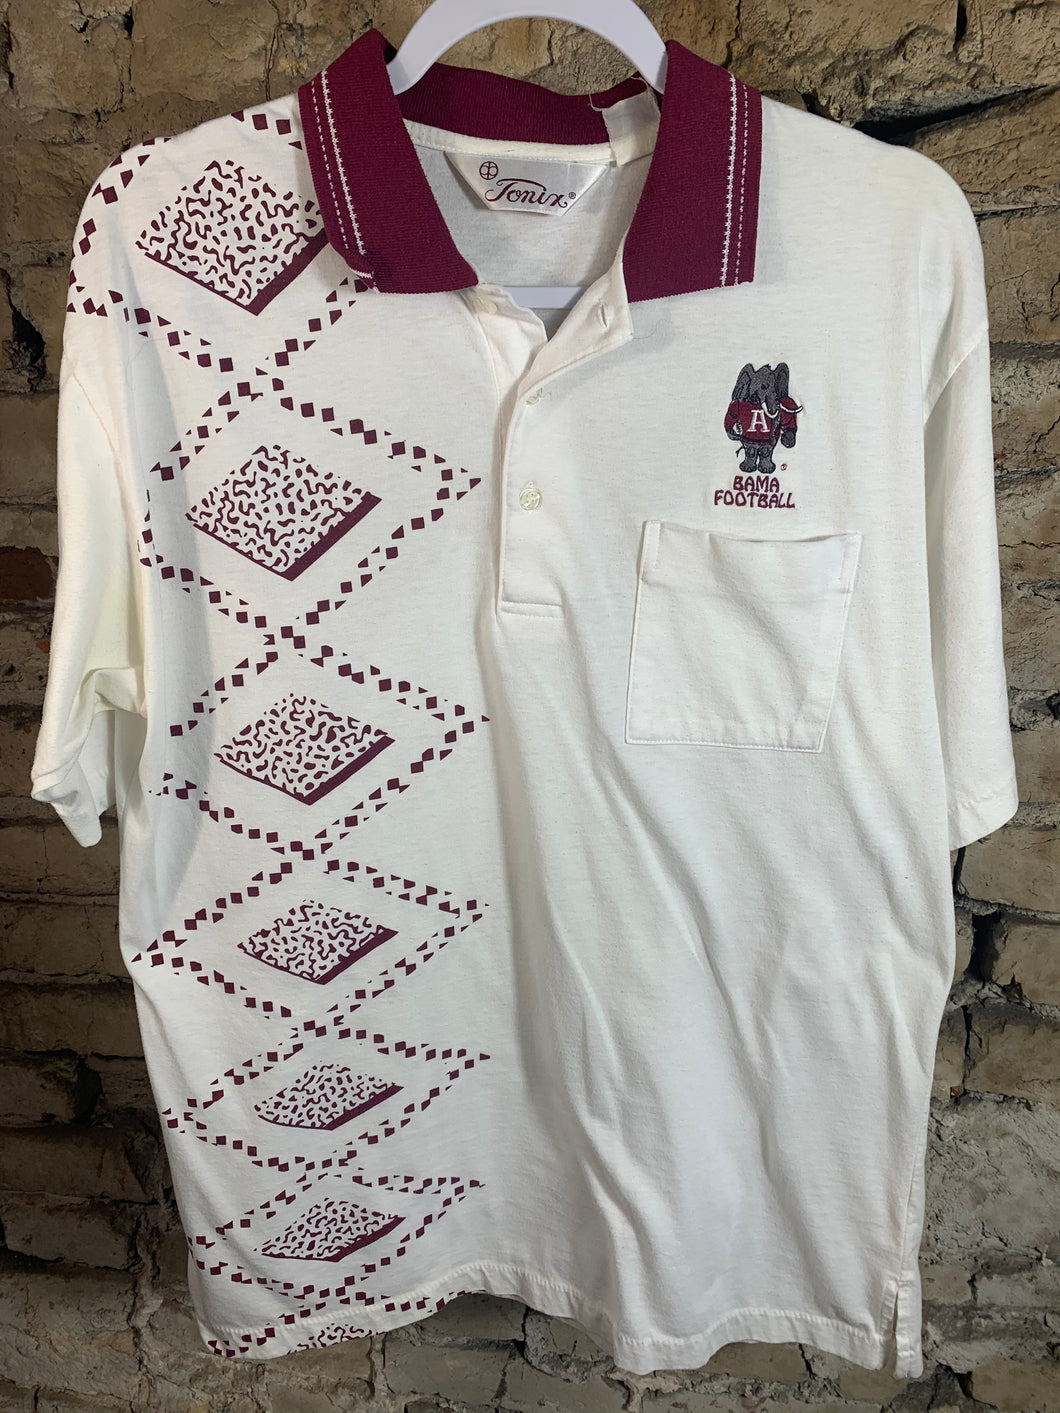 Vintage Rare Alabama Coaches Polo Shirt Large